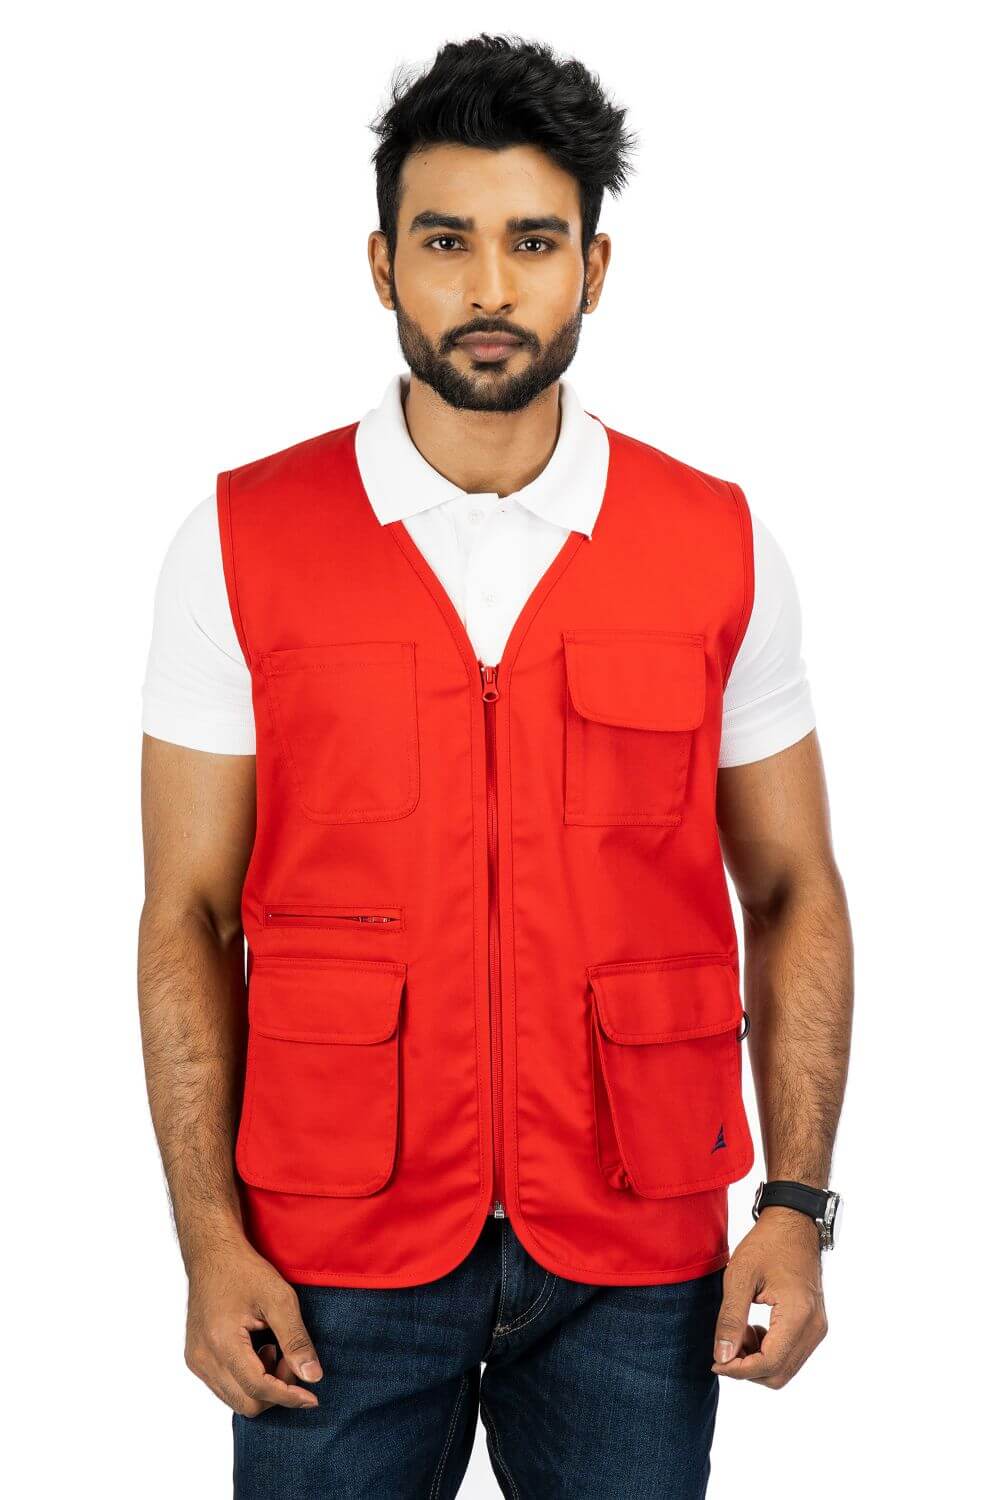 Stylised mid-torso bone pockets with concealed zips. An ergonomically designed multi-utility safari Red vest.